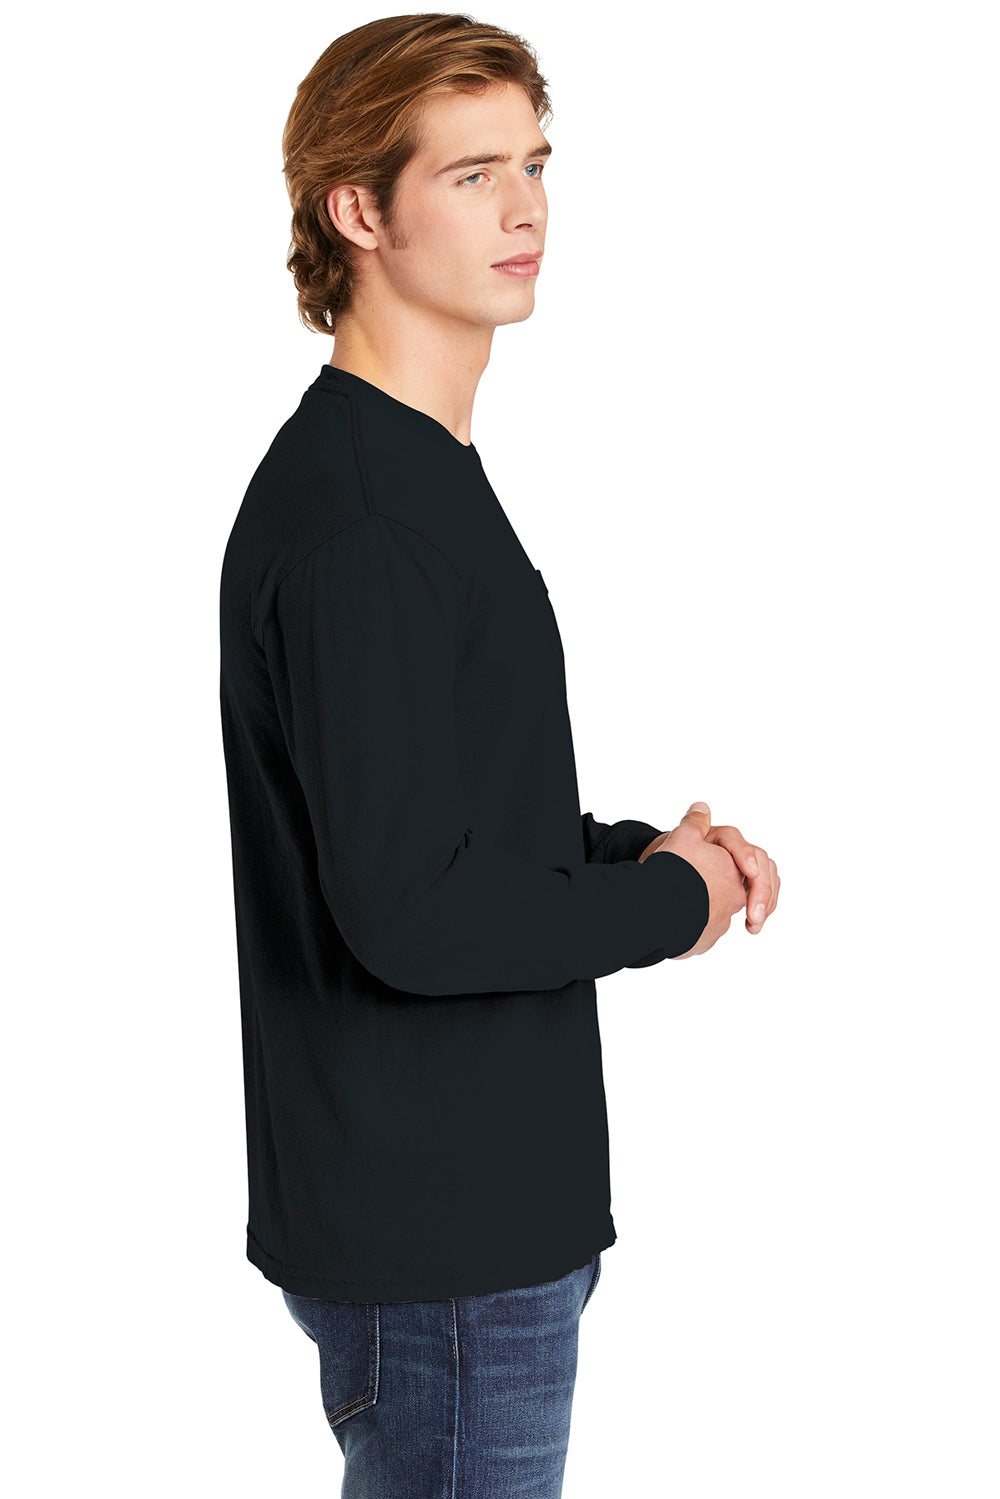 Comfort Colors 4410/C4410 Mens Long Sleeve Crewneck T-Shirt w/ Pocket Black Side